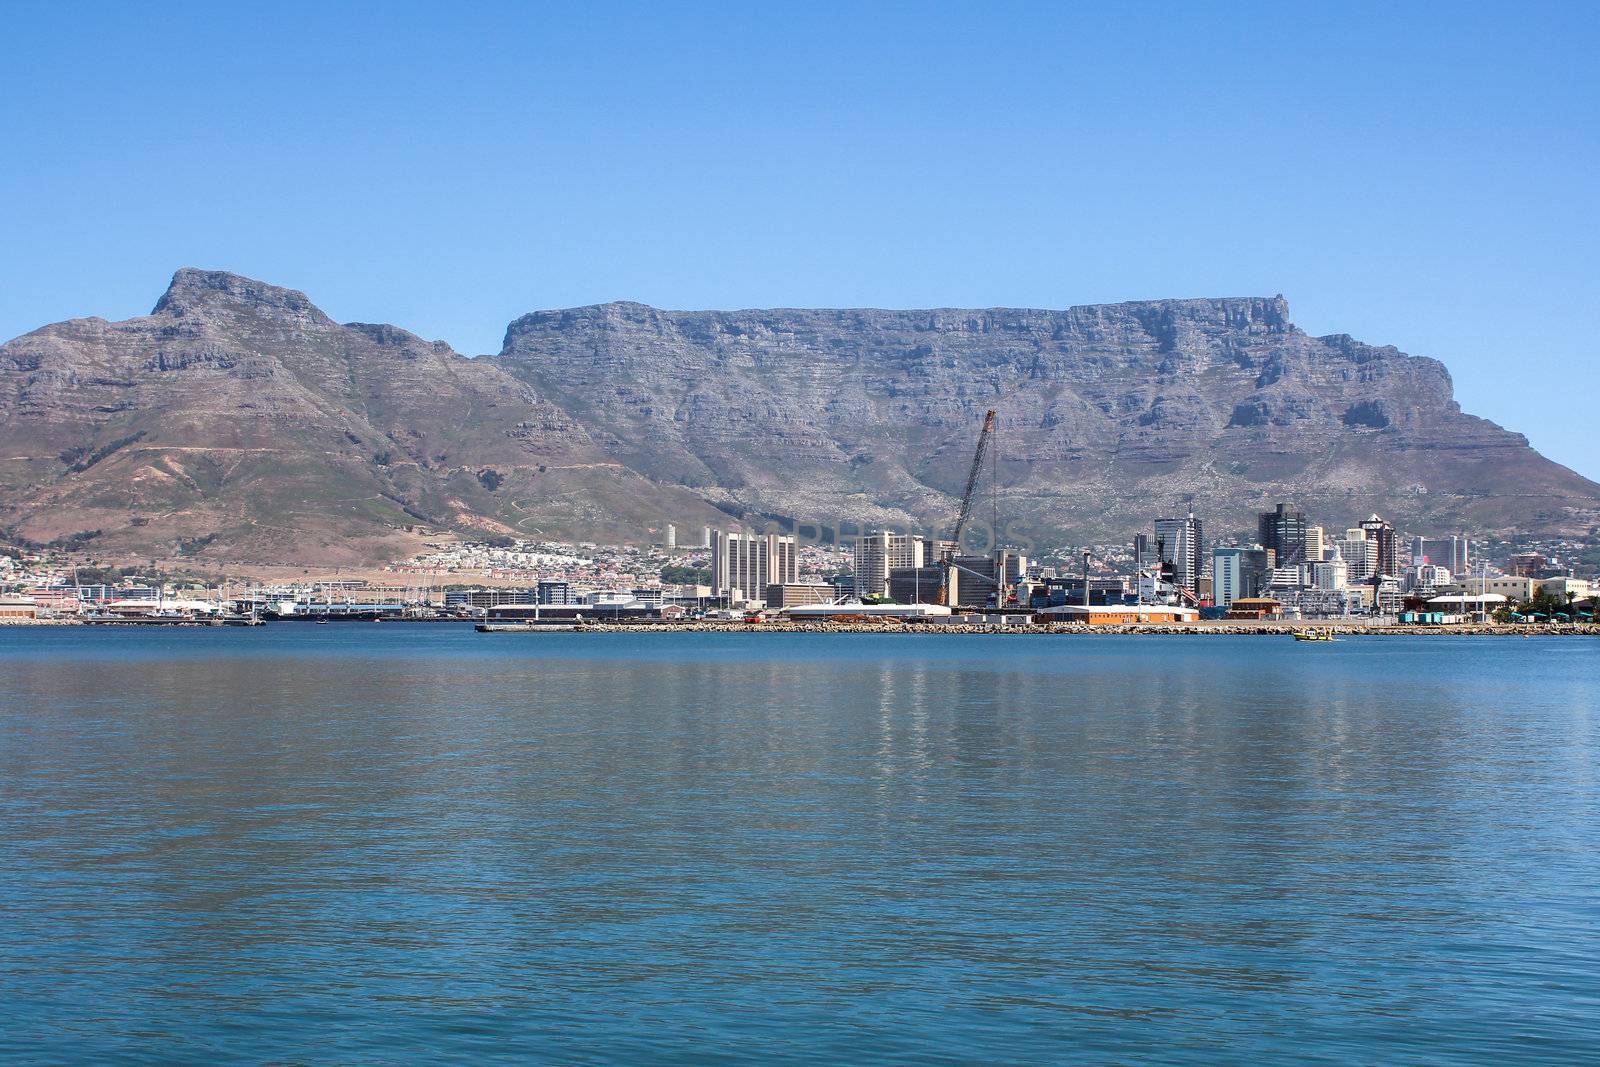 Cape Town Harbor by dwaschnig_photo